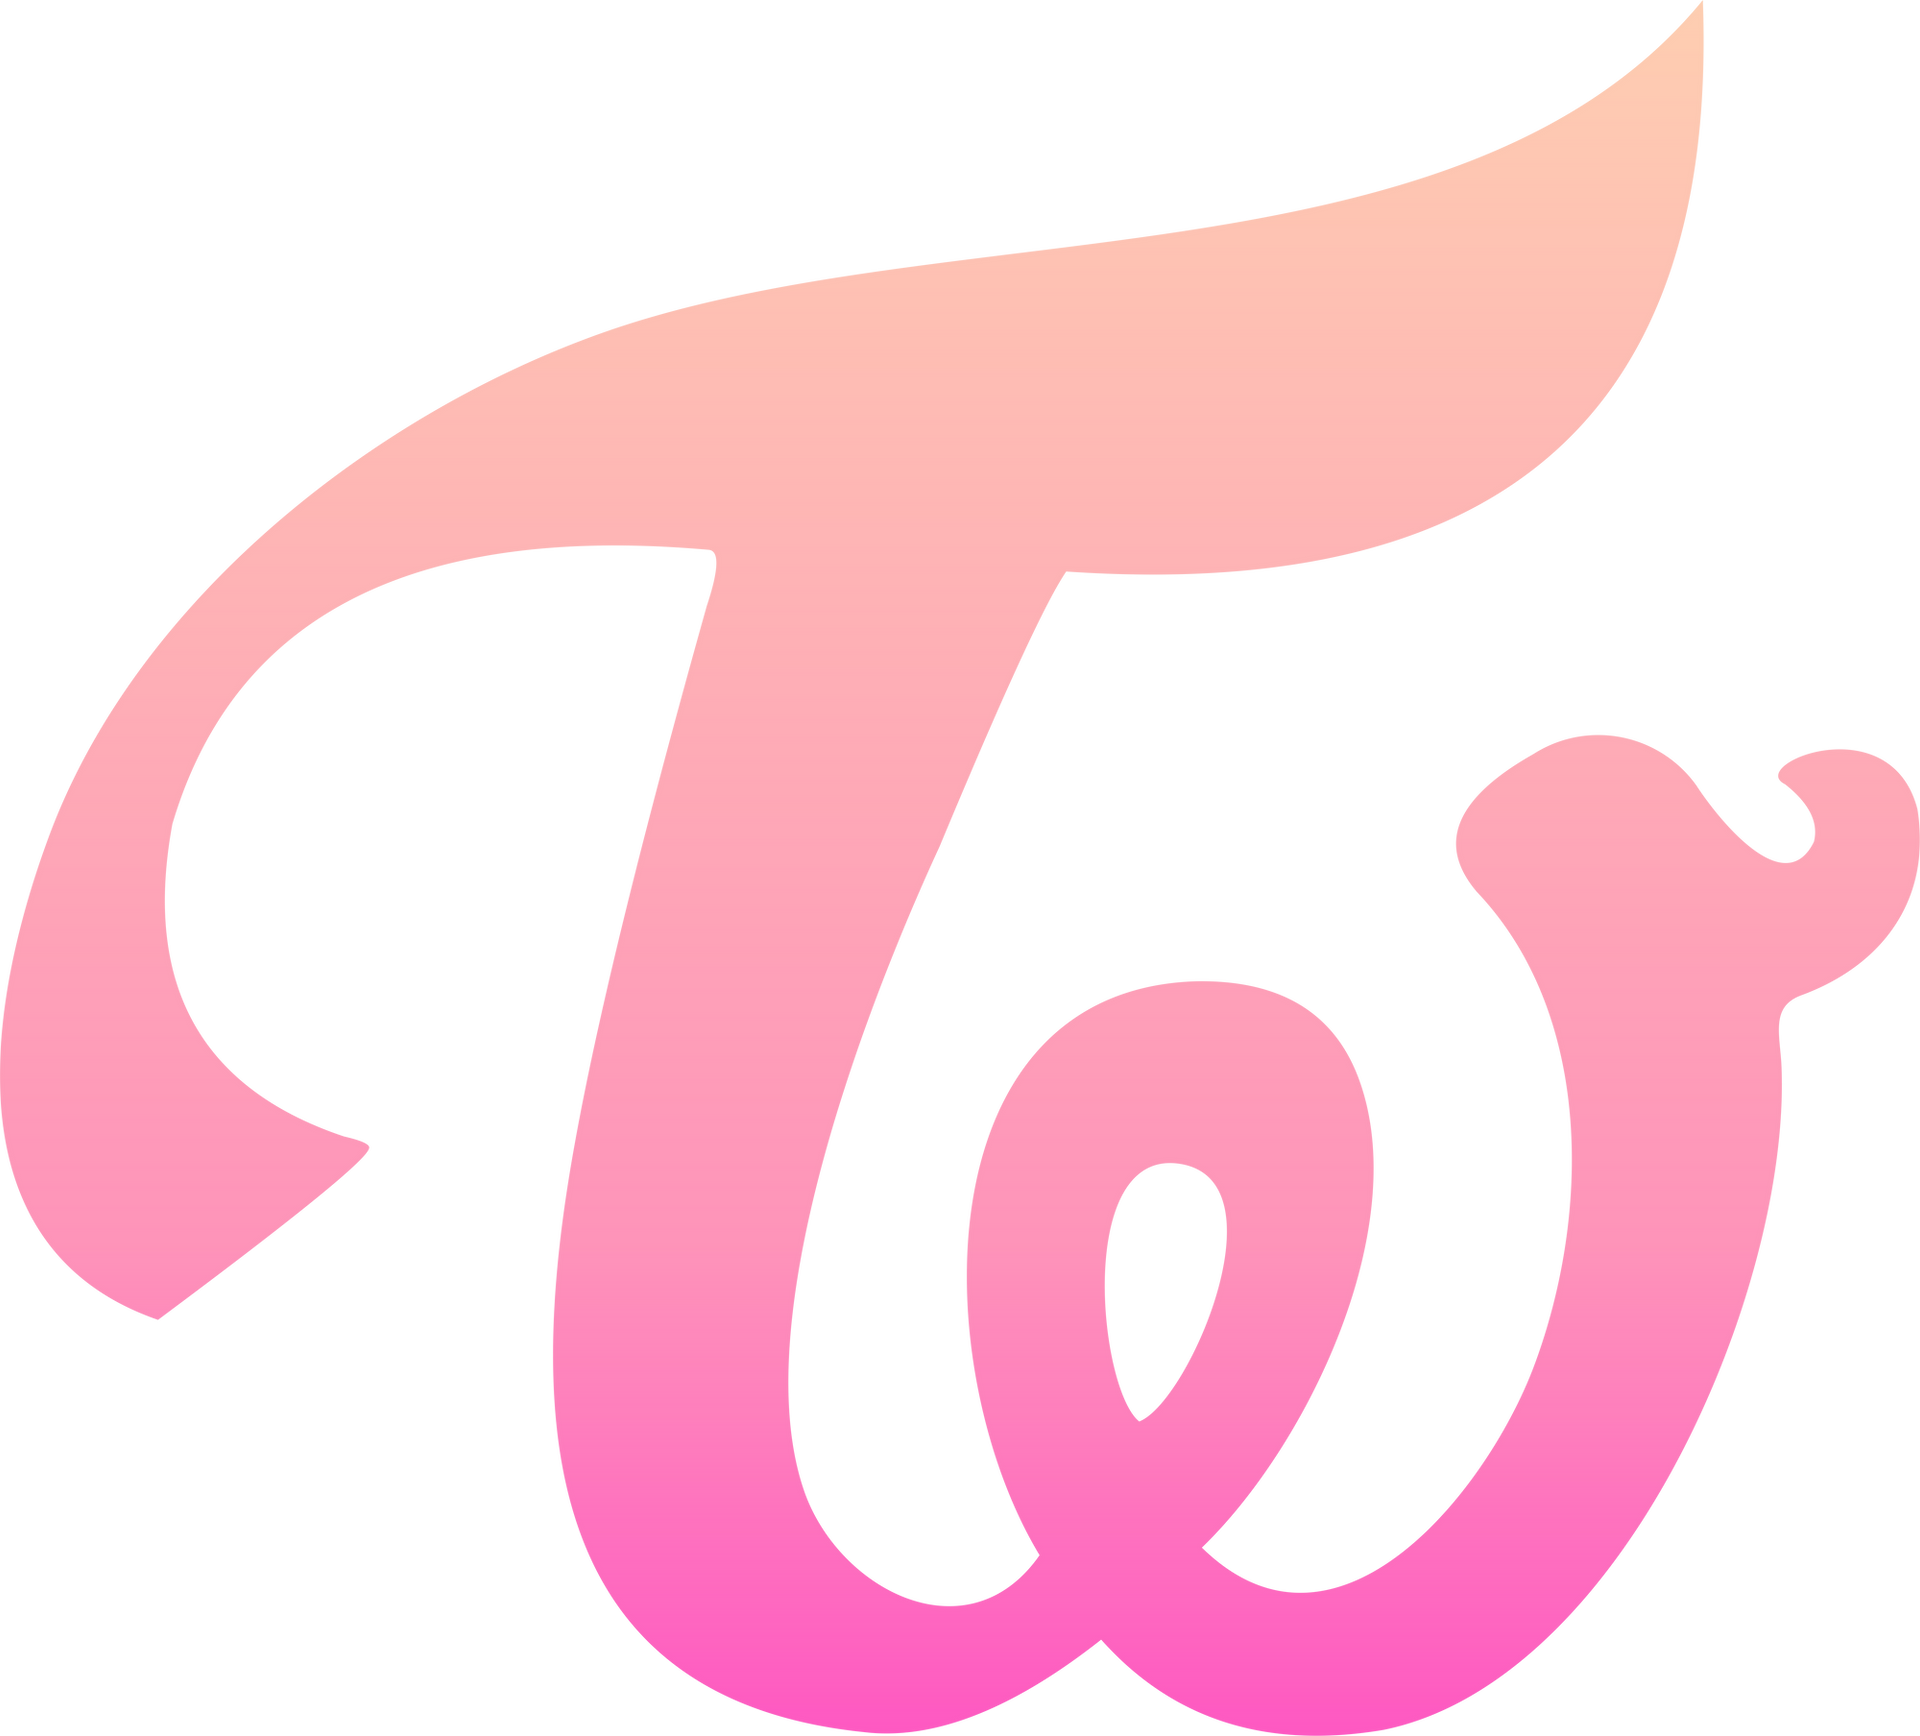 Category:TWICE, Logopedia